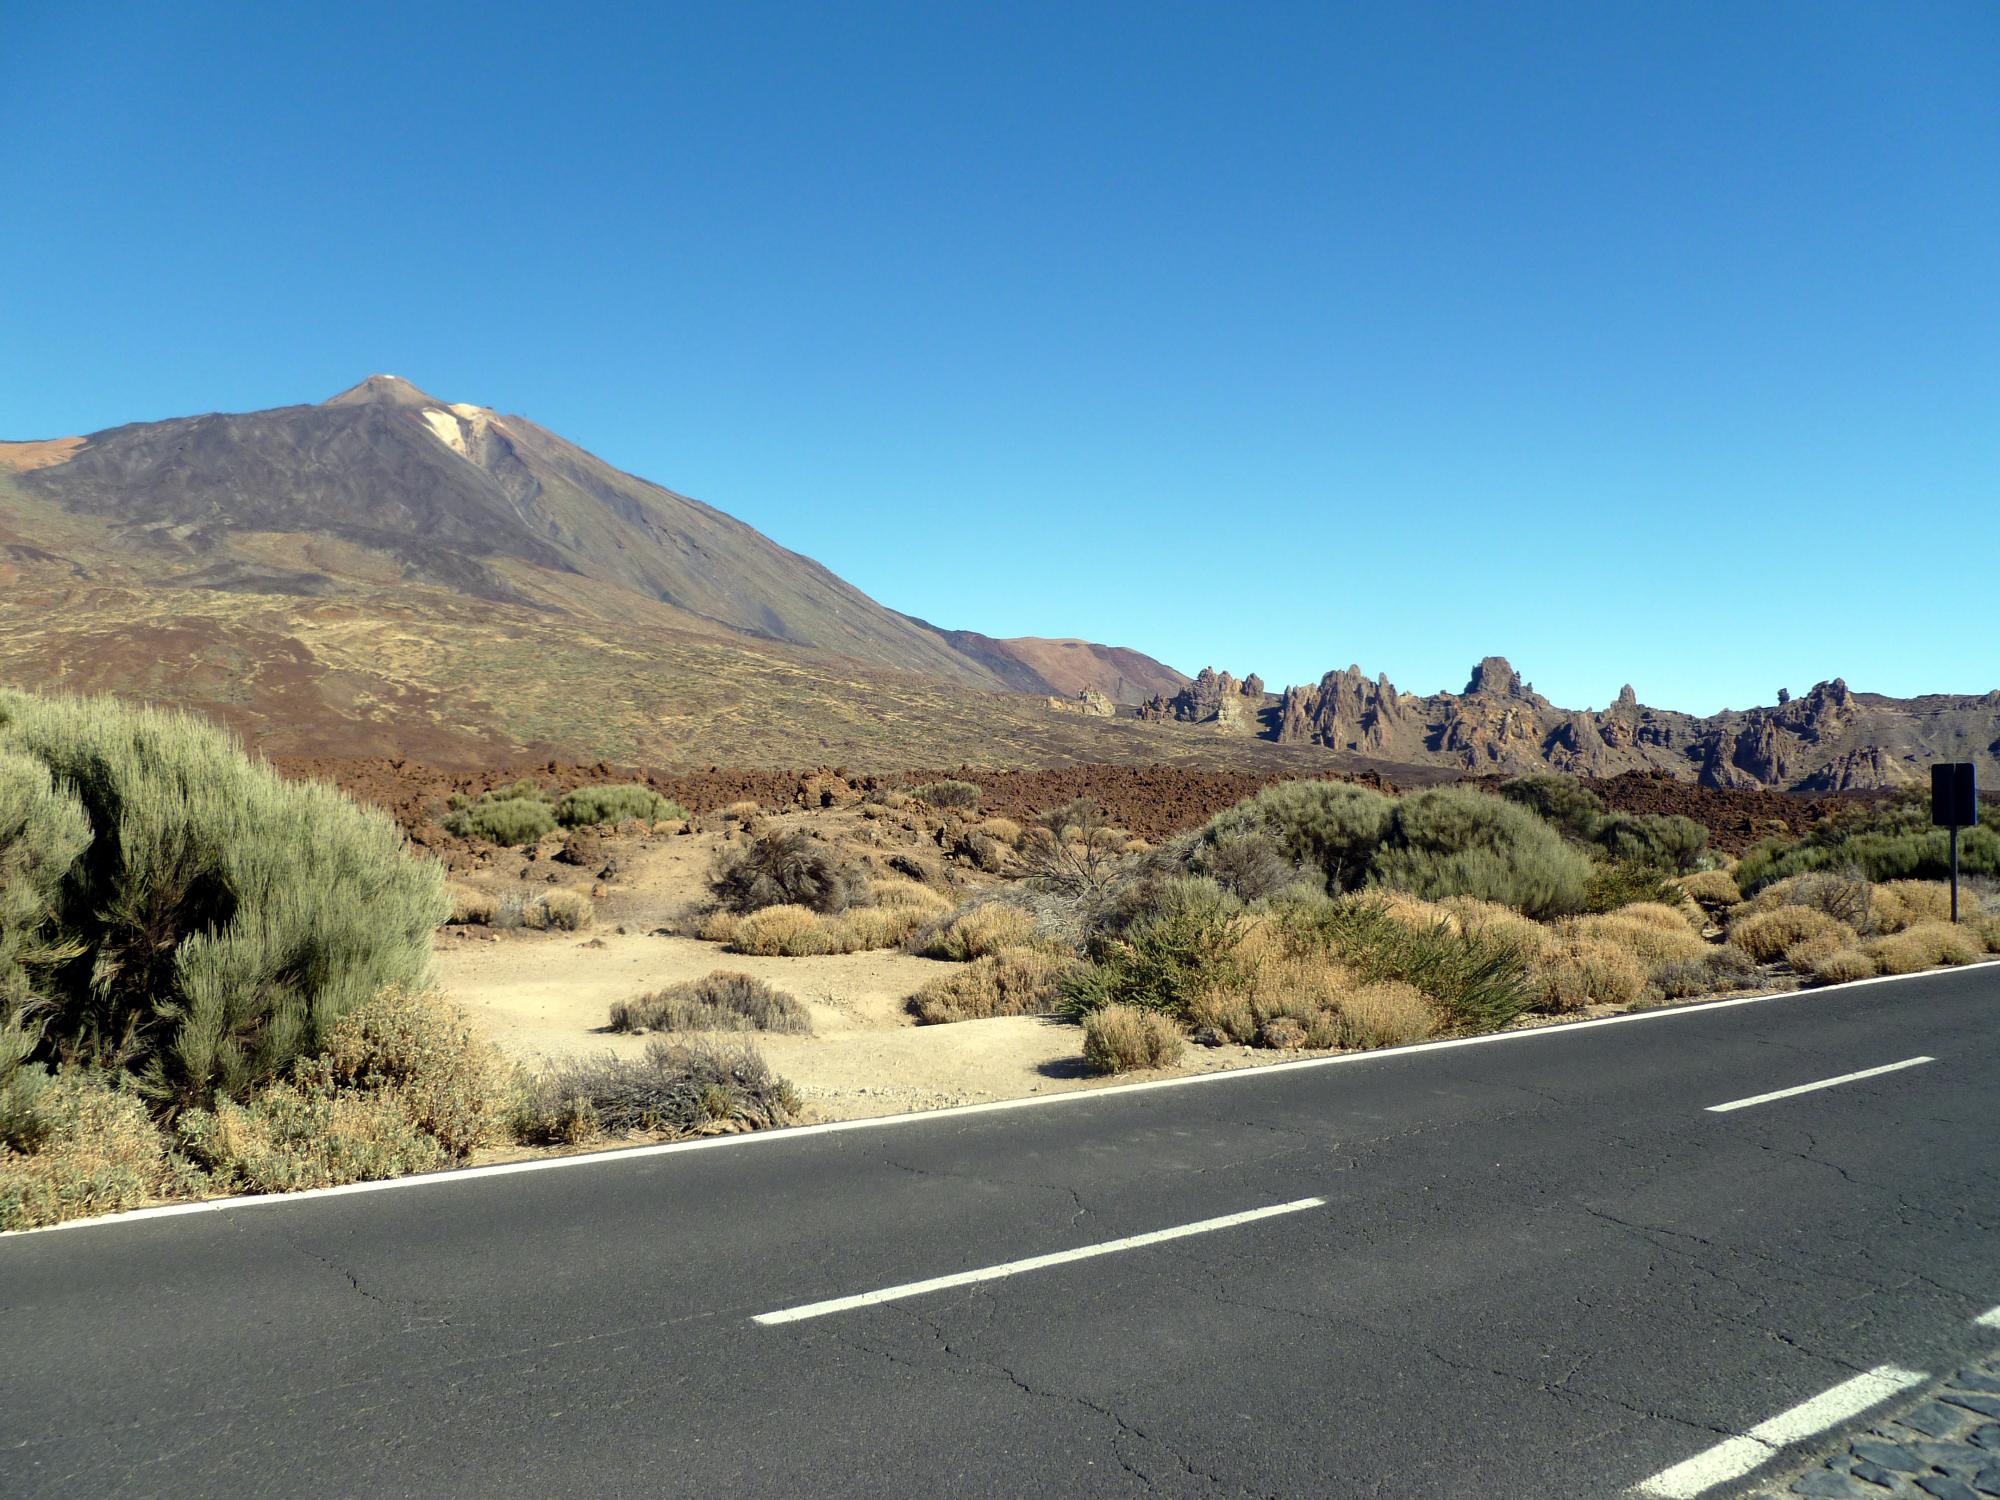  Canary Islands - El Teide National Park #1